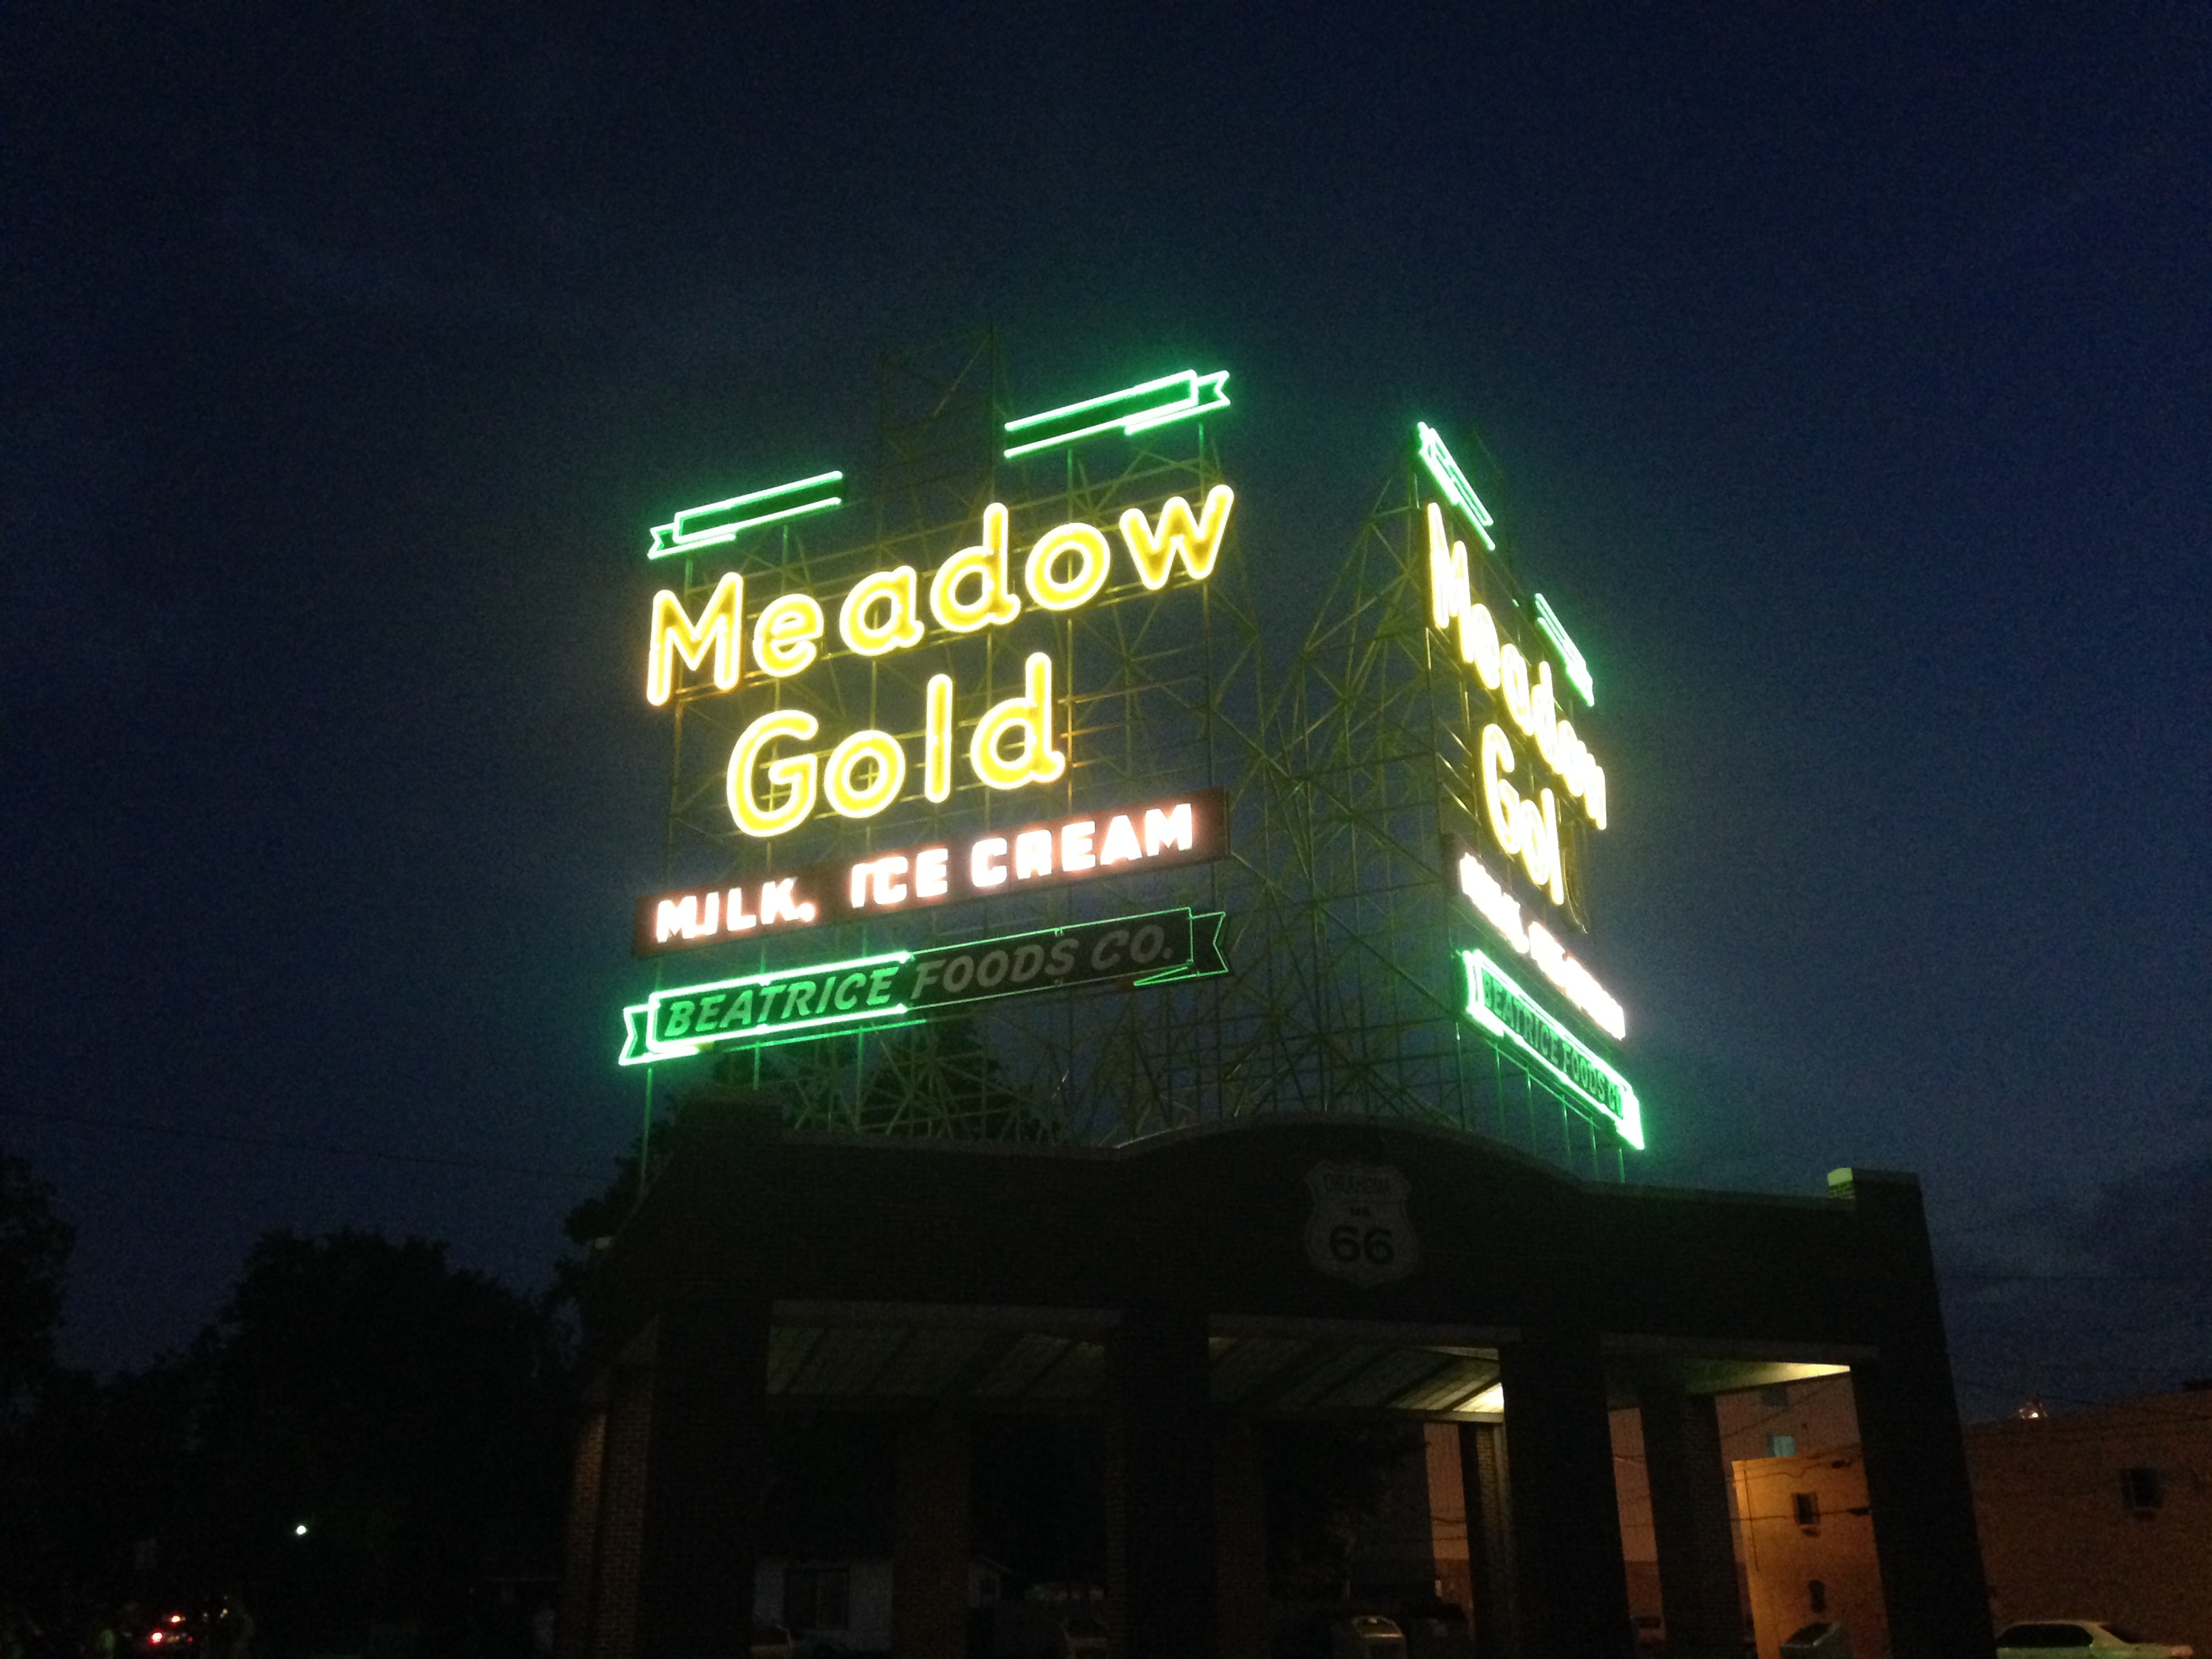 Meadow Gold historic neon sign in Tulsa Oklahoma